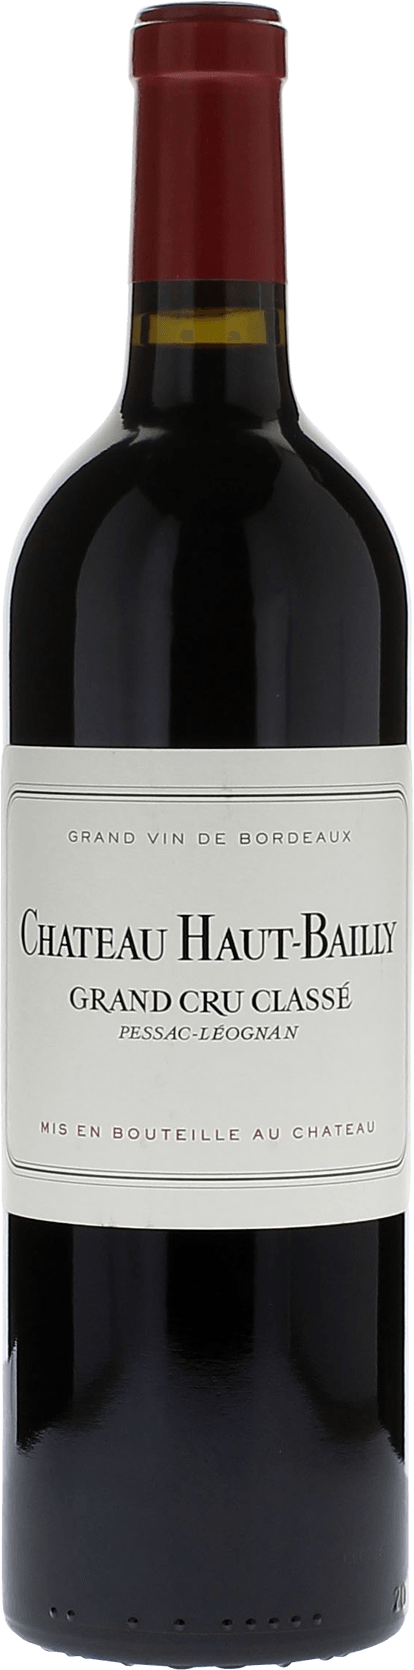 Haut bailly 1985 cru class Pessac-Lognan, Bordeaux rouge